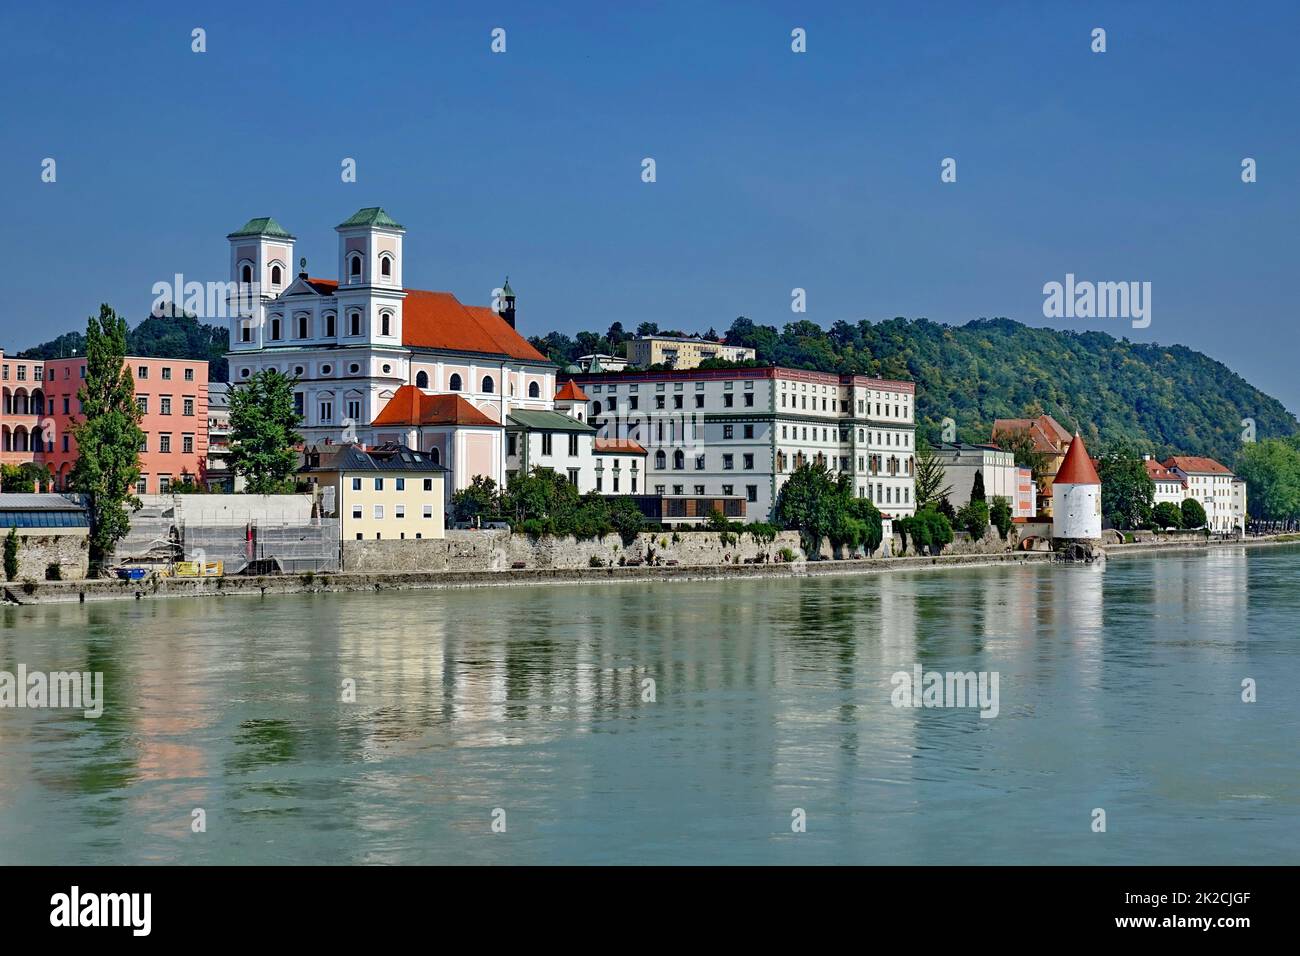 Bavaria, Lower Bavaria, Passau, City of three rivers, Jesuit Church St. Michael, Schaiblingsturm, Danube, geography, tourism Stock Photo